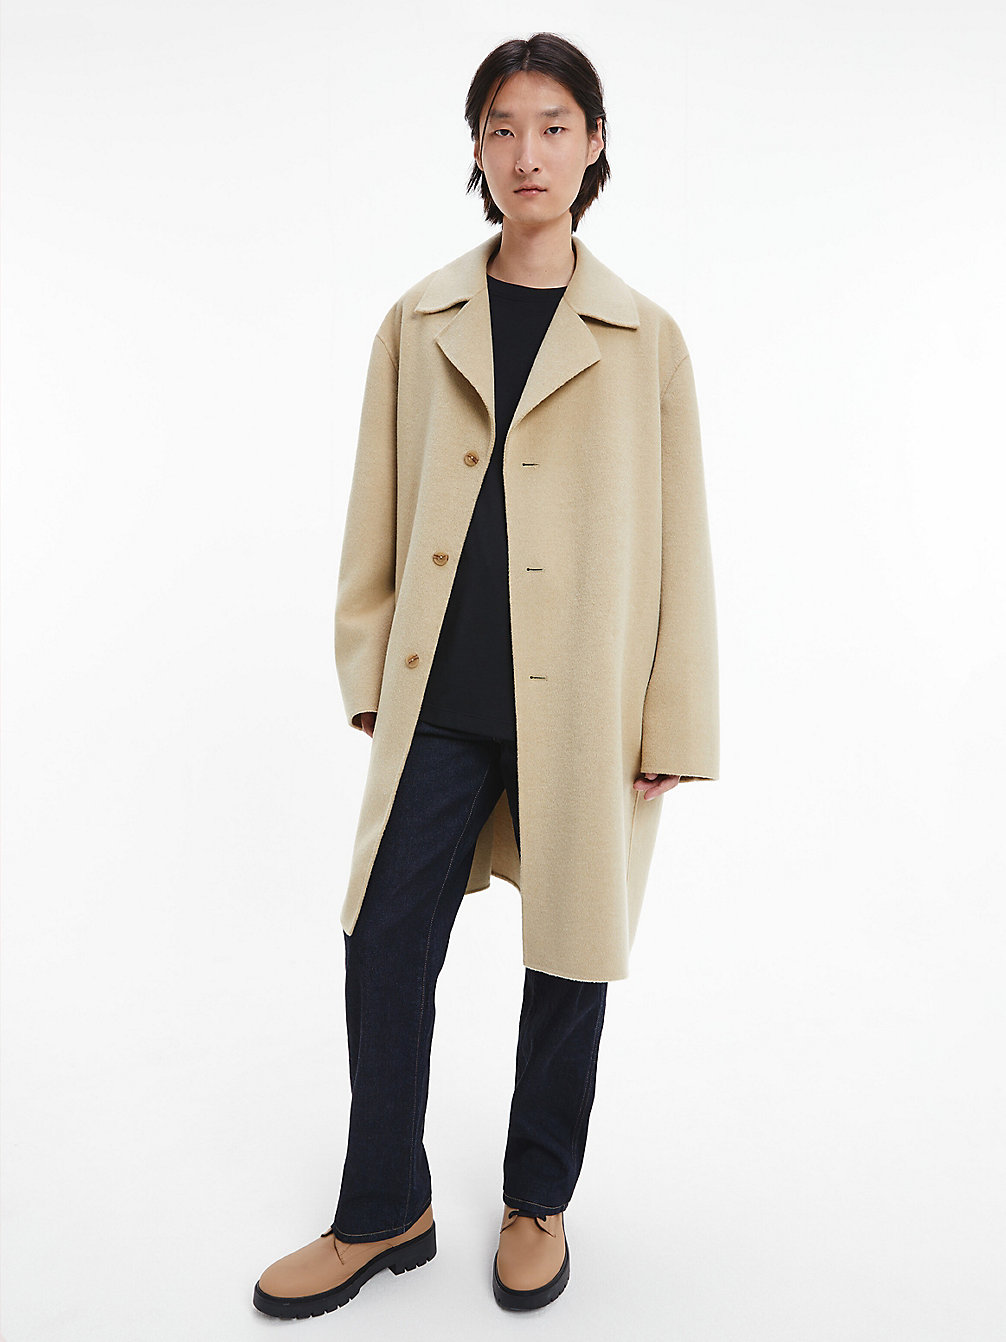 NETTLE Unisex Bonded Wool Coat - CK Standards undefined men Calvin Klein